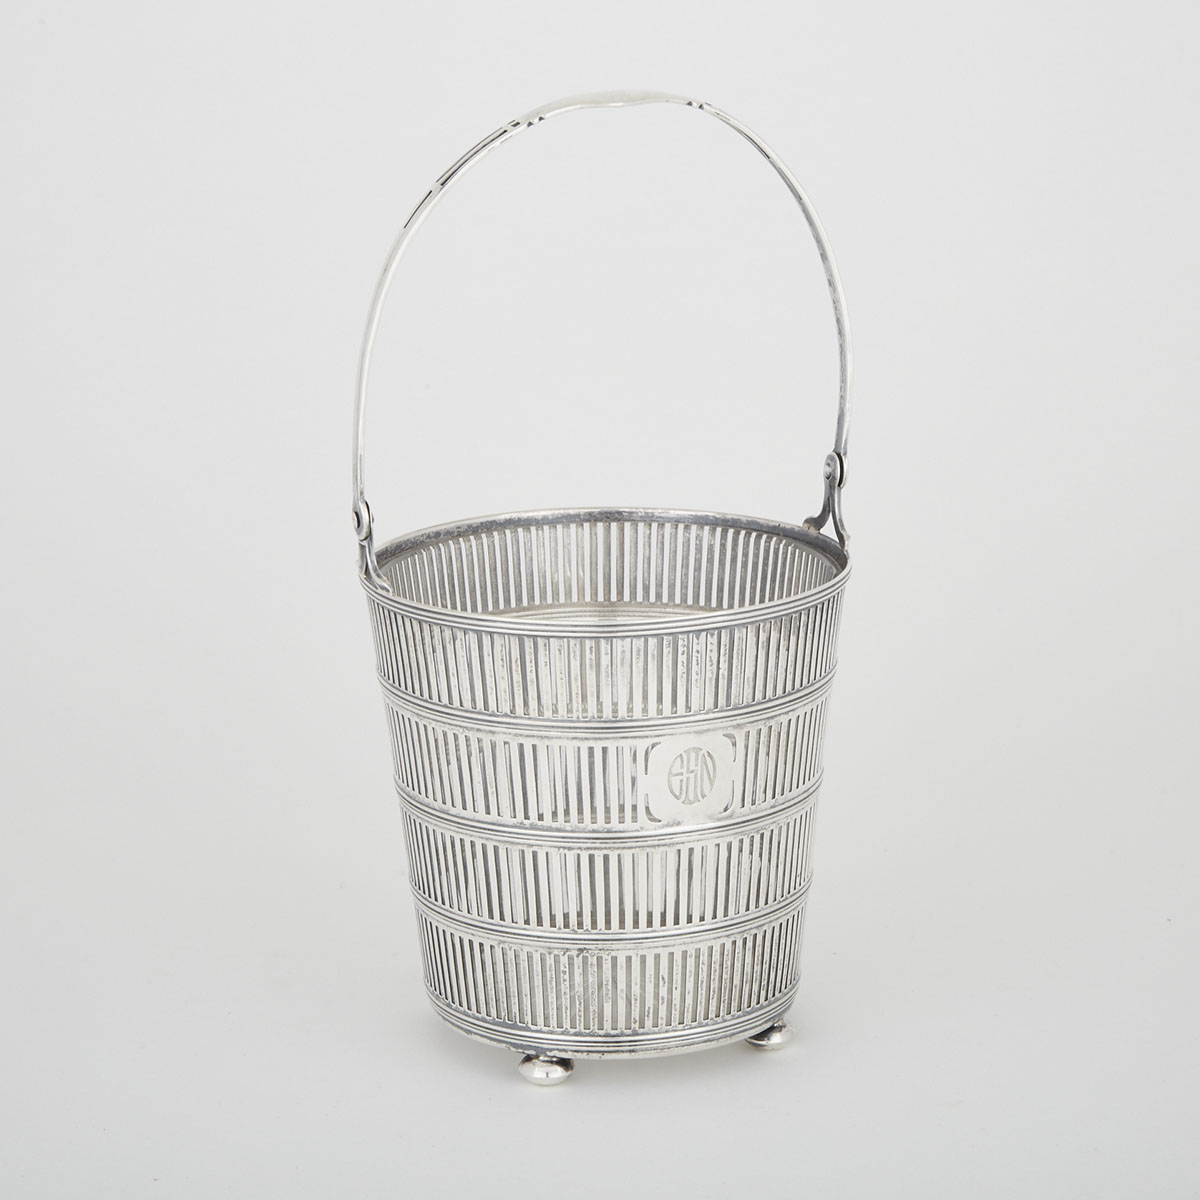 American Silver Ice Bucket, Watson Co., Attleboro, Mass., early 20th century